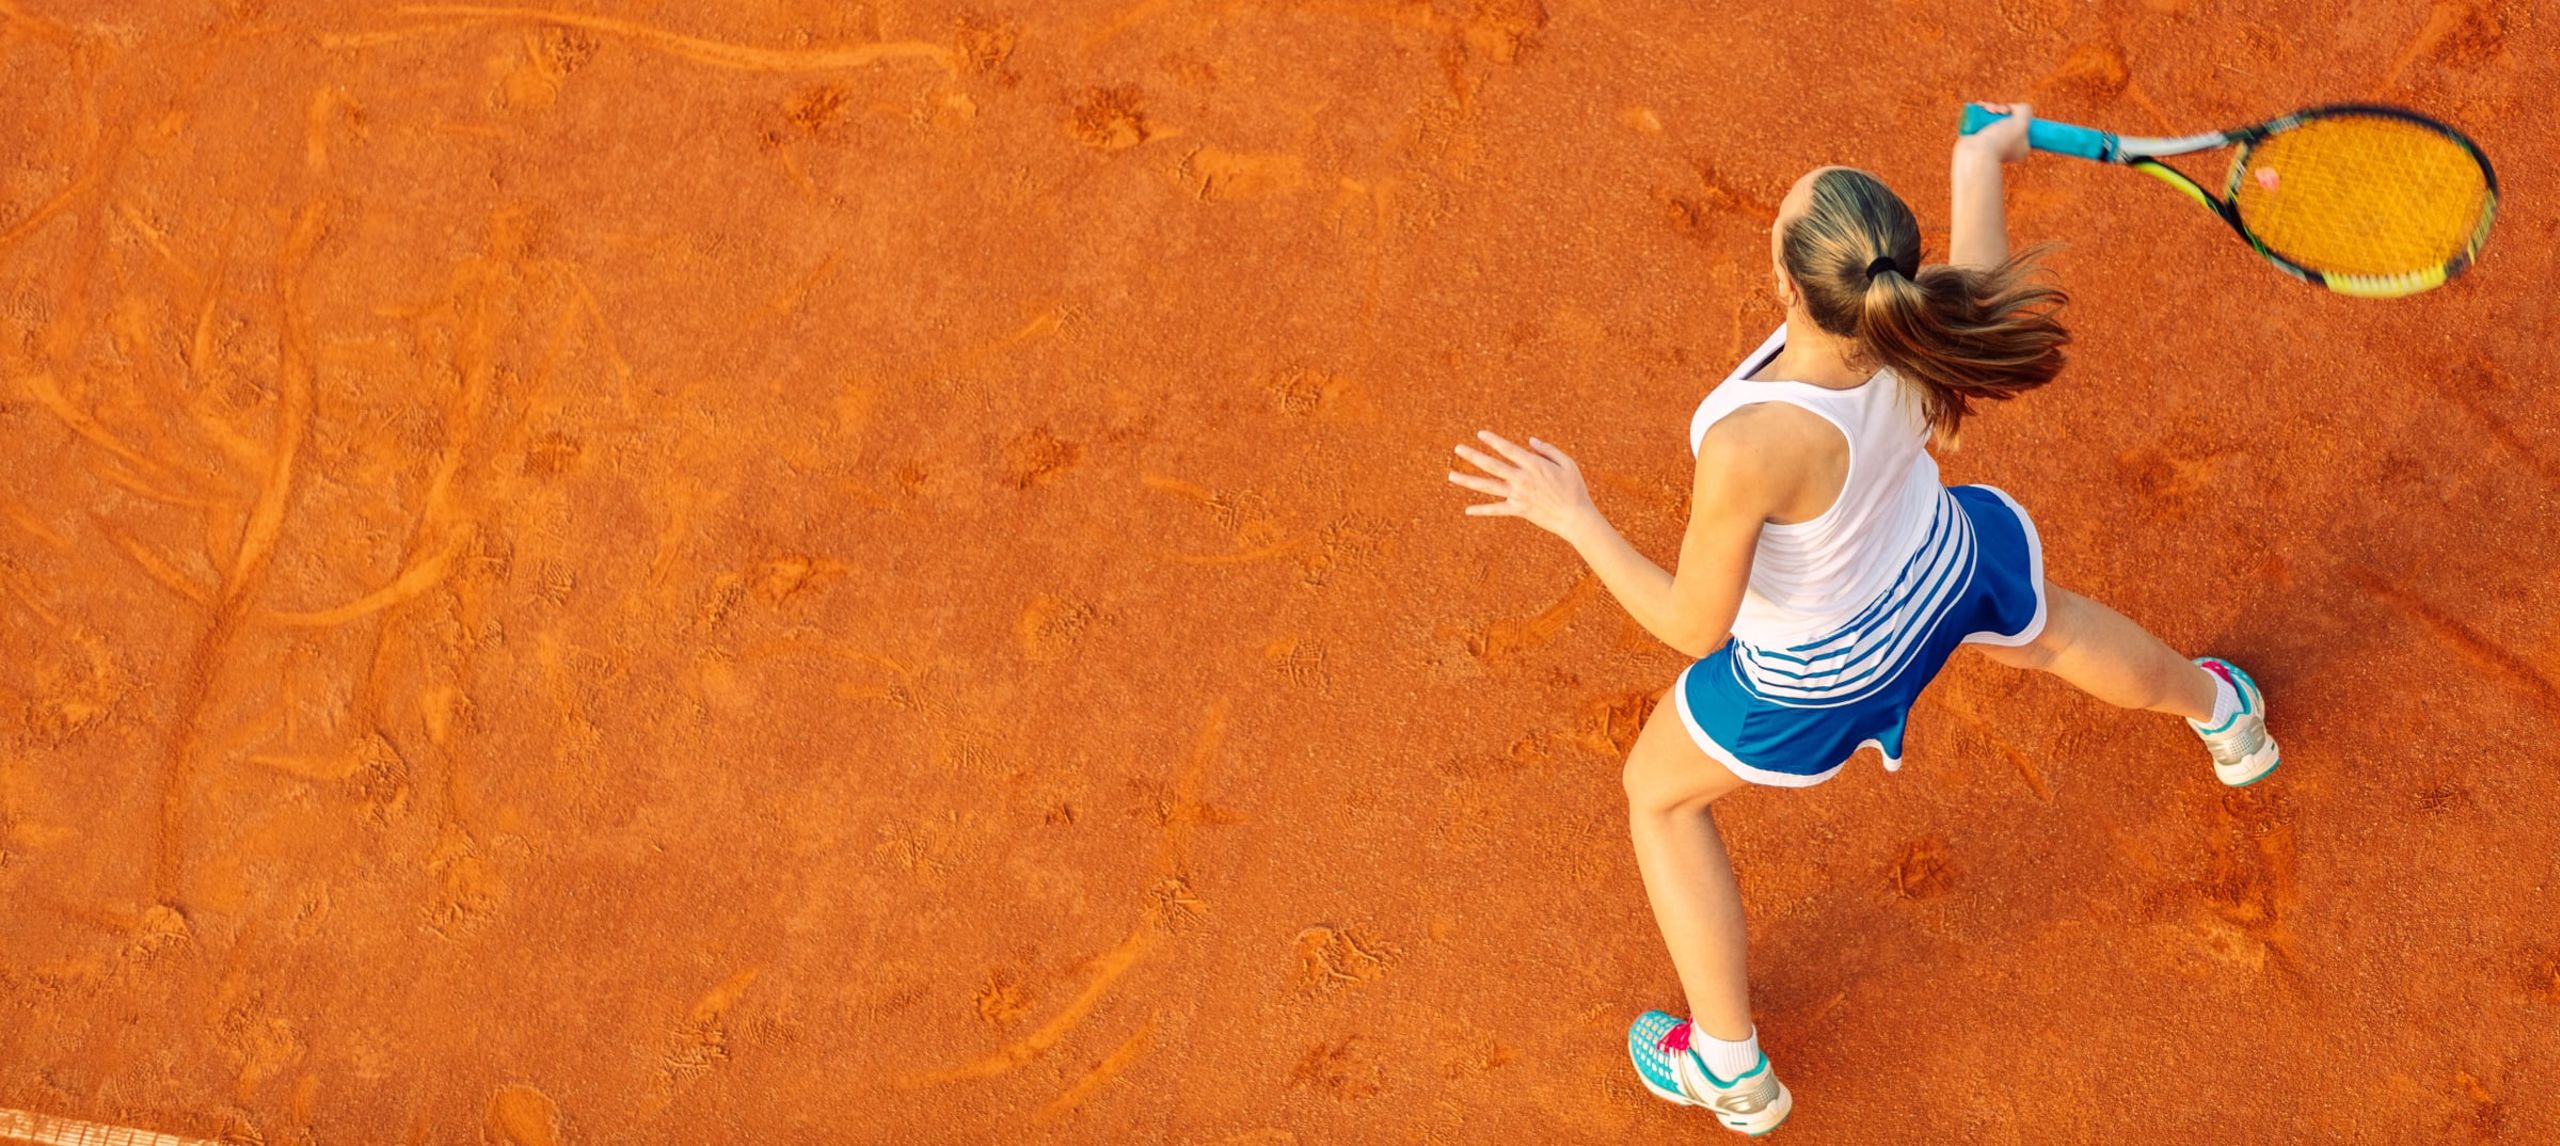 Girl playing tennis on red tarmac